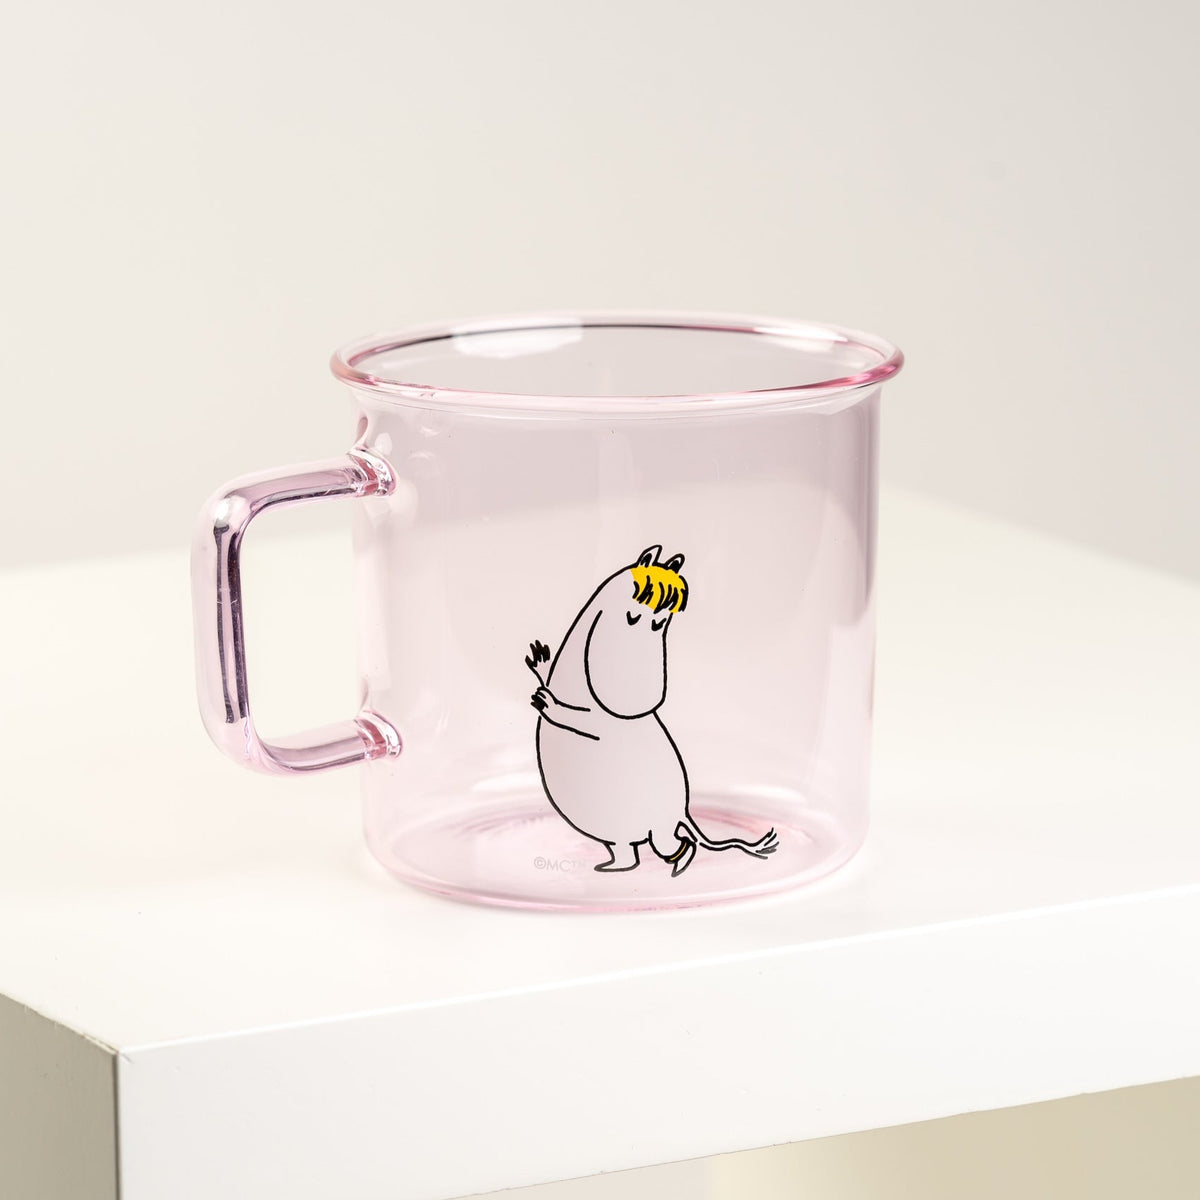 Muurla Moomin Snorkmaiden Mug in Glass 